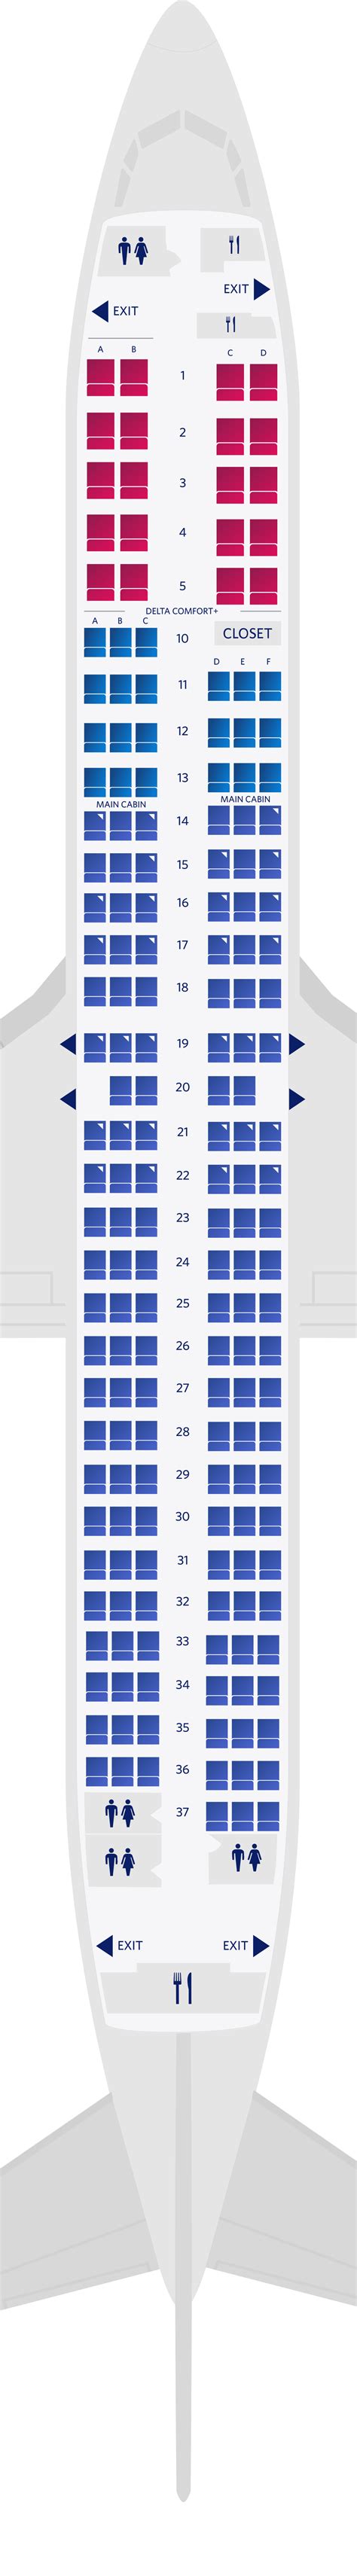 boeing 737-900er seating chart